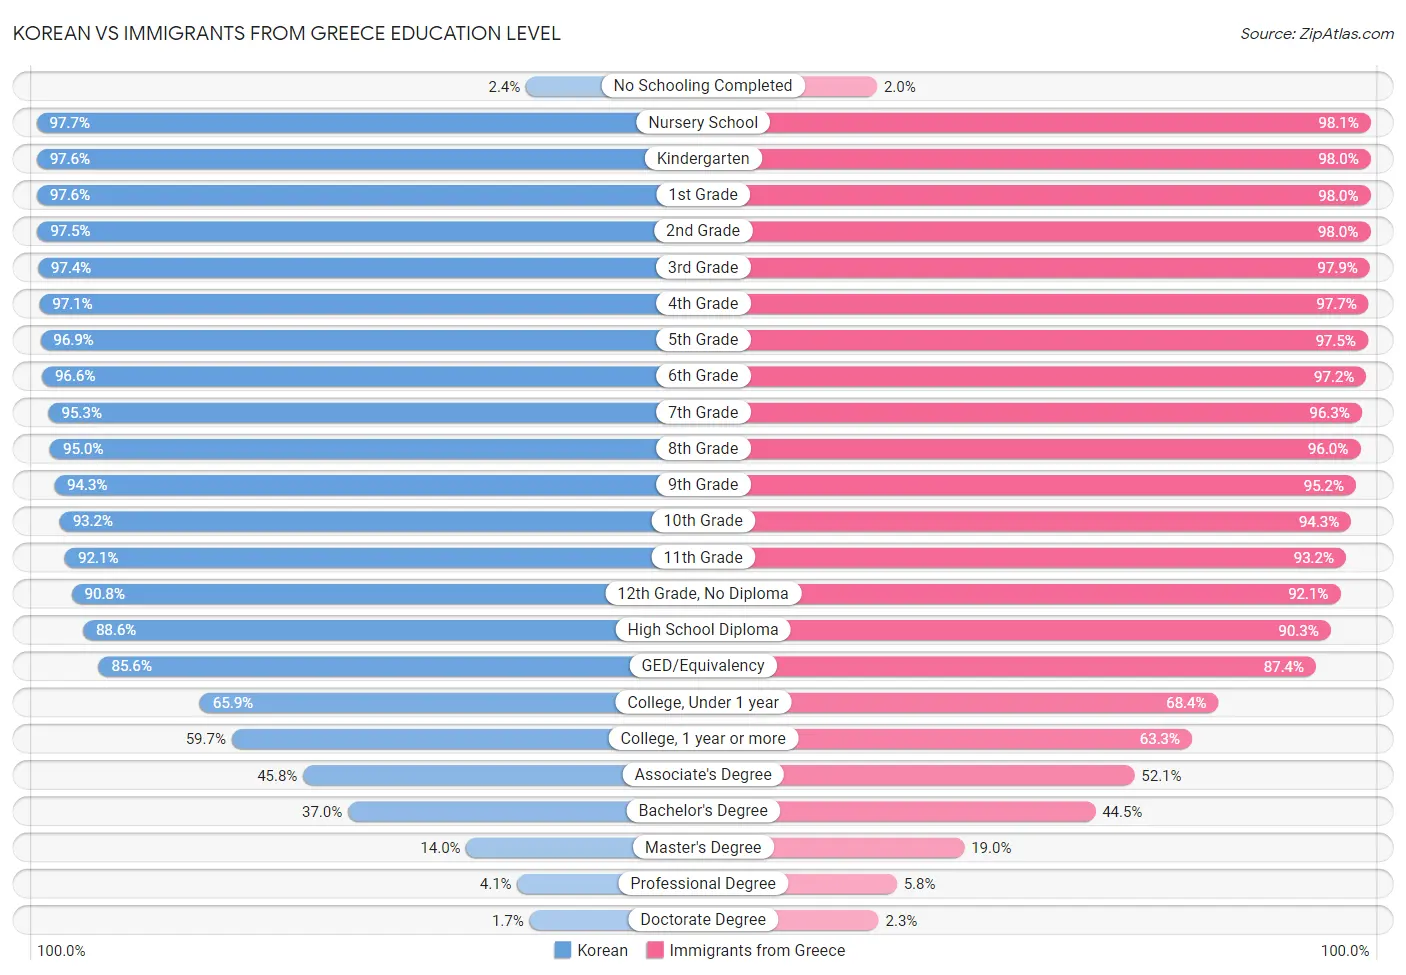 Korean vs Immigrants from Greece Education Level